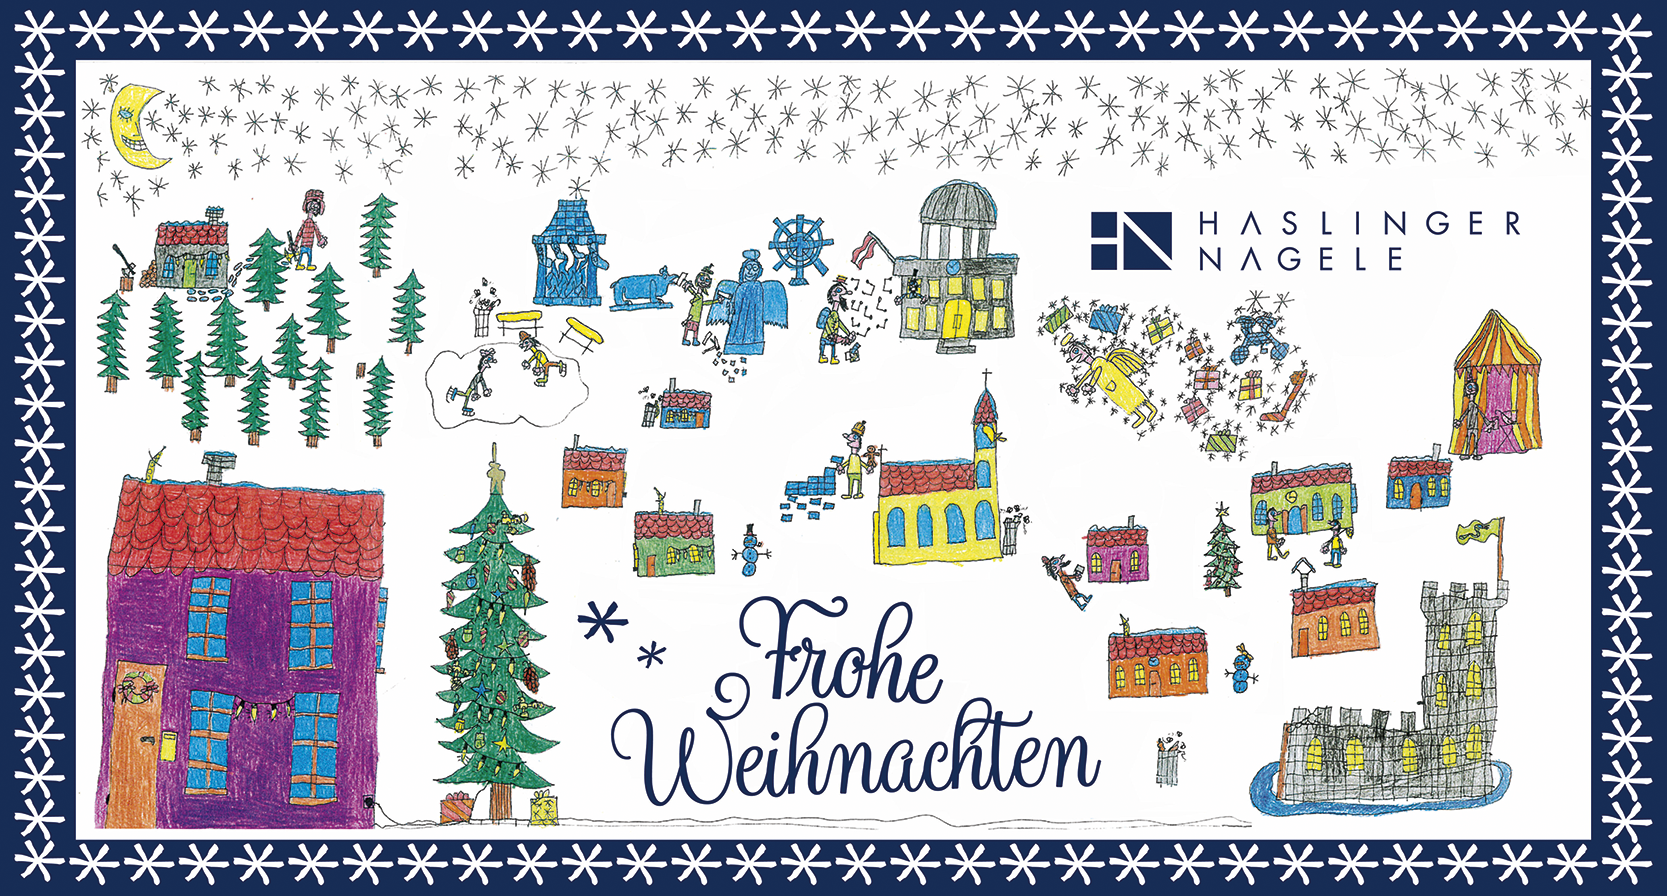 Frohe Weihnachten wünscht Haslinger / Nagele, Illustration: Simon Werl